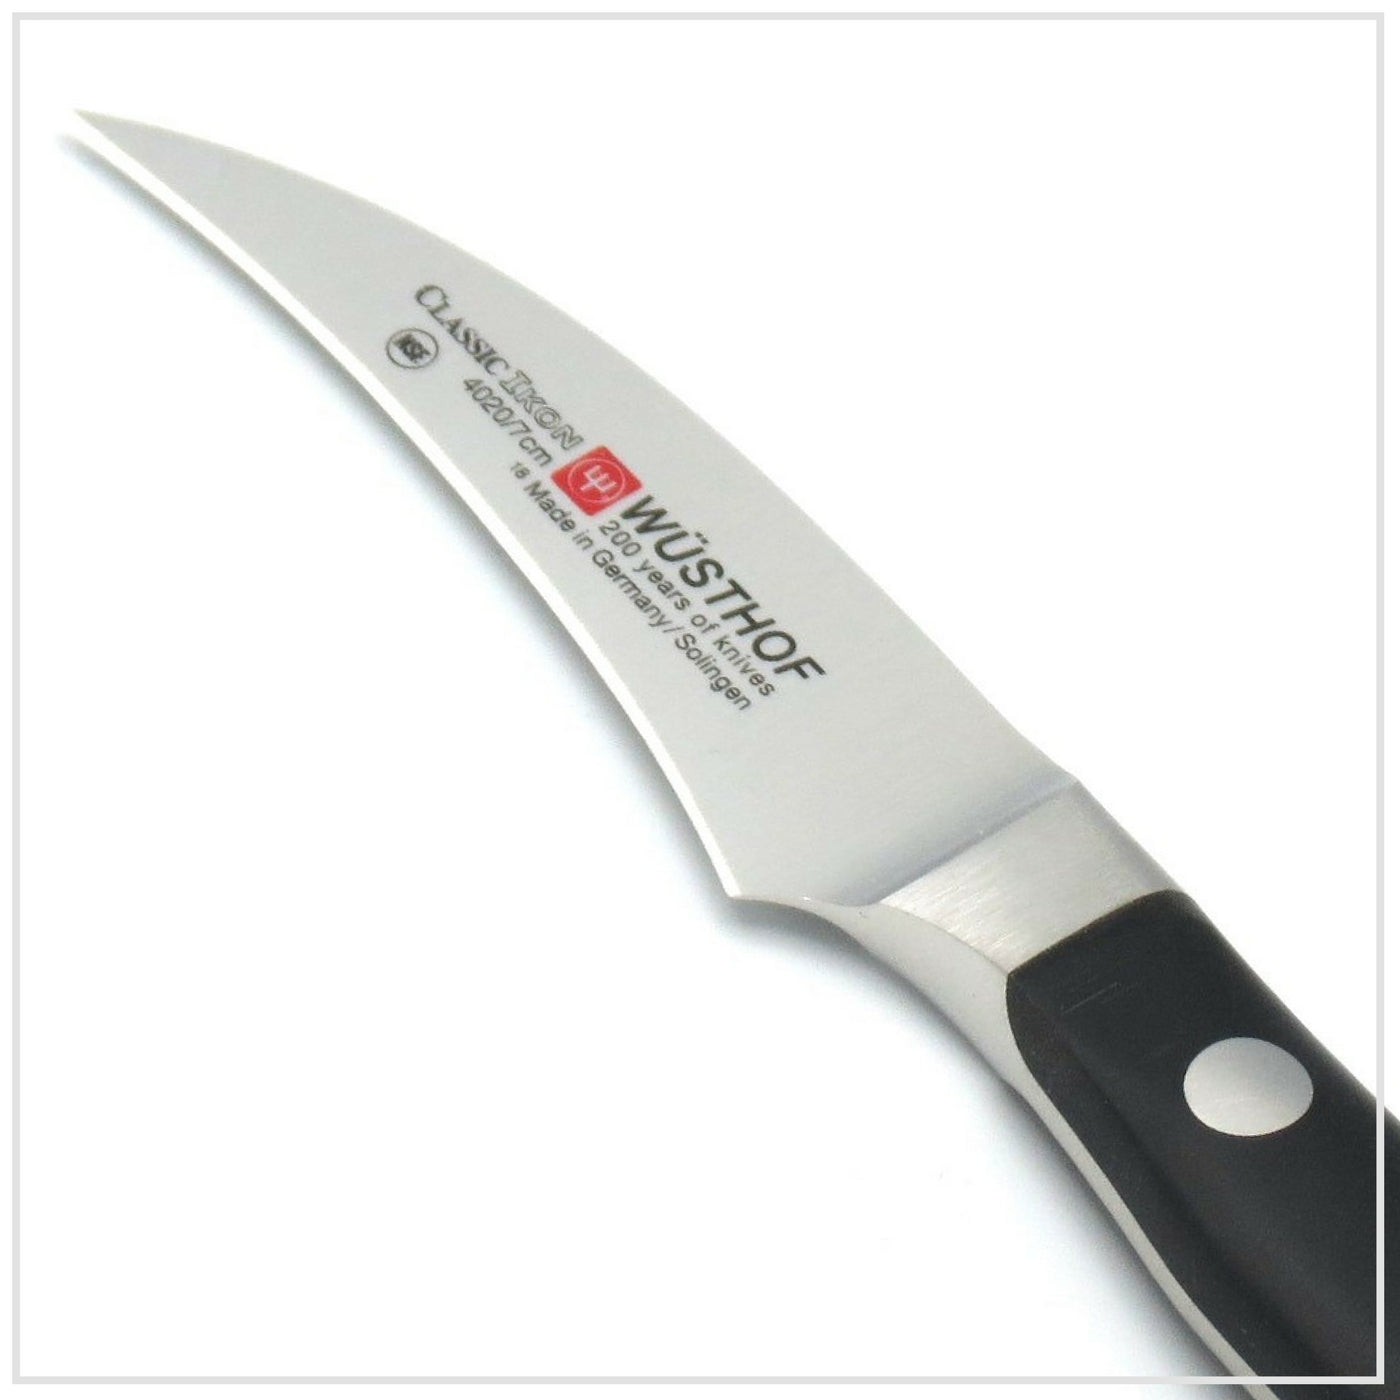 Wusthof Classic Ikon Peeling Knife